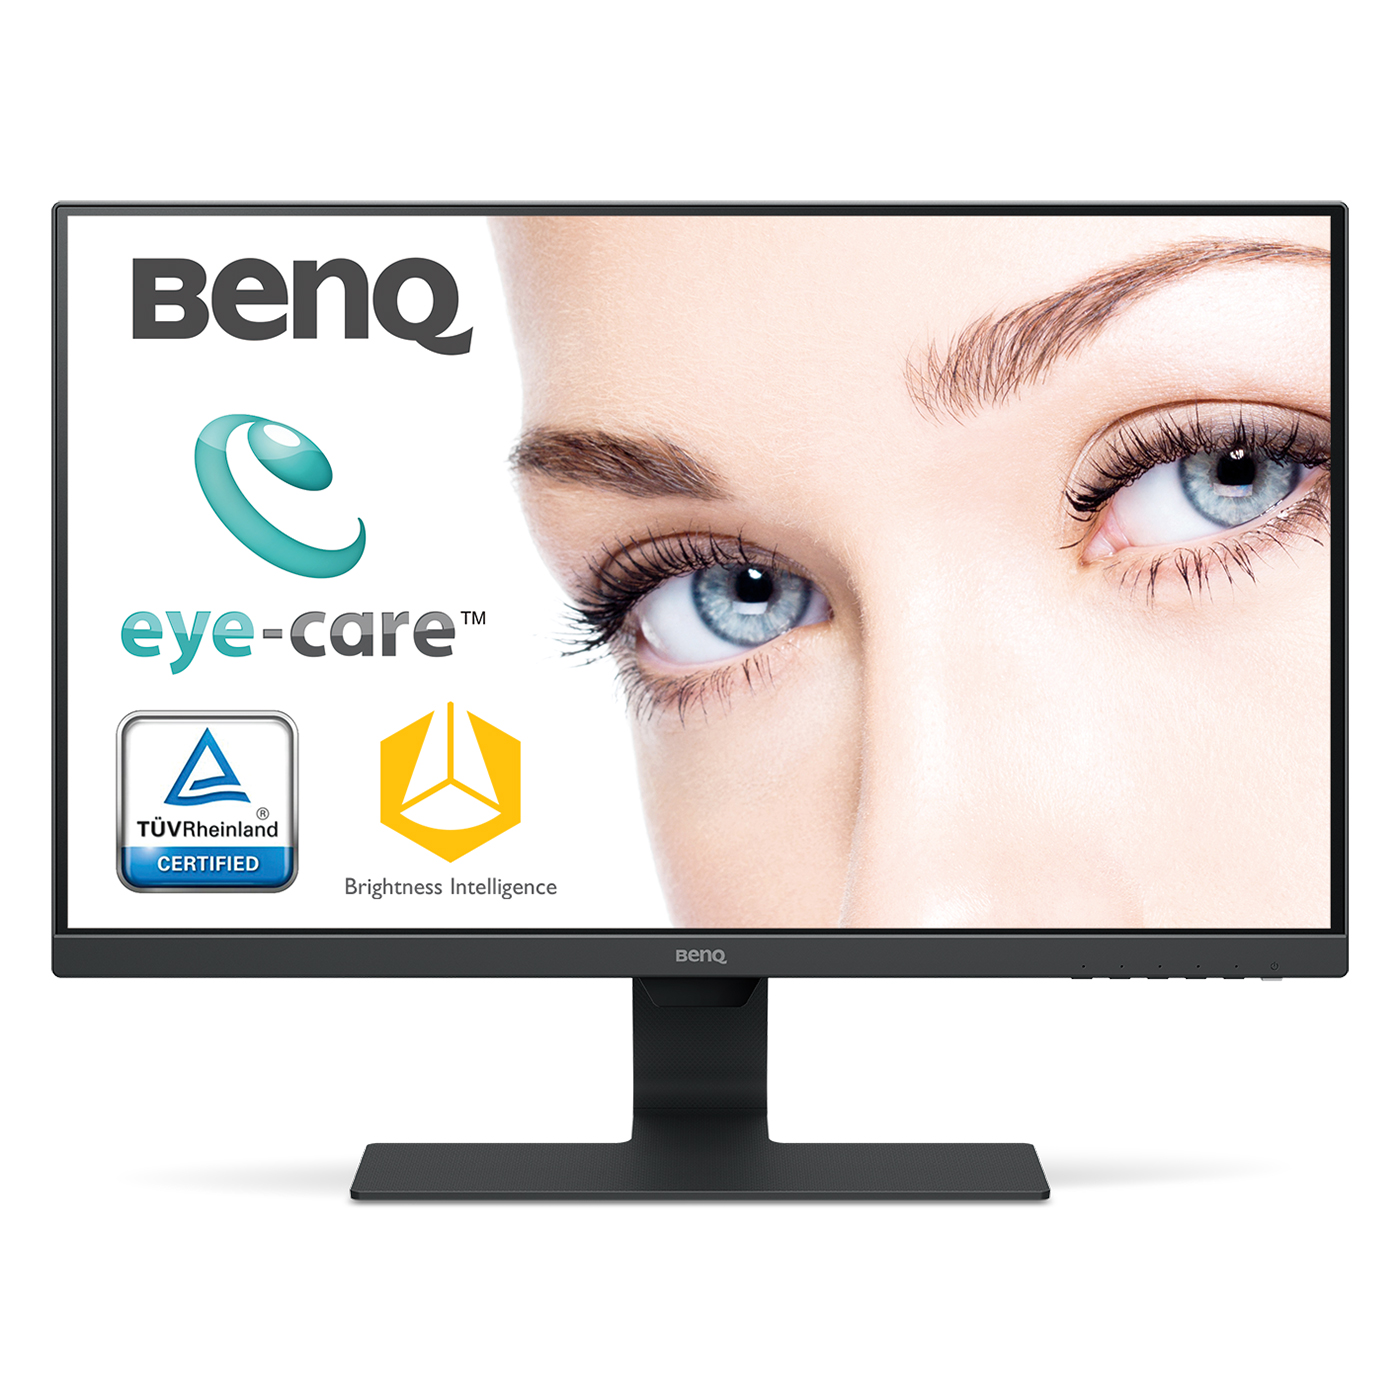 BenQ GW2780 1080p Full HD IPS monitor with speakers | BenQ UK